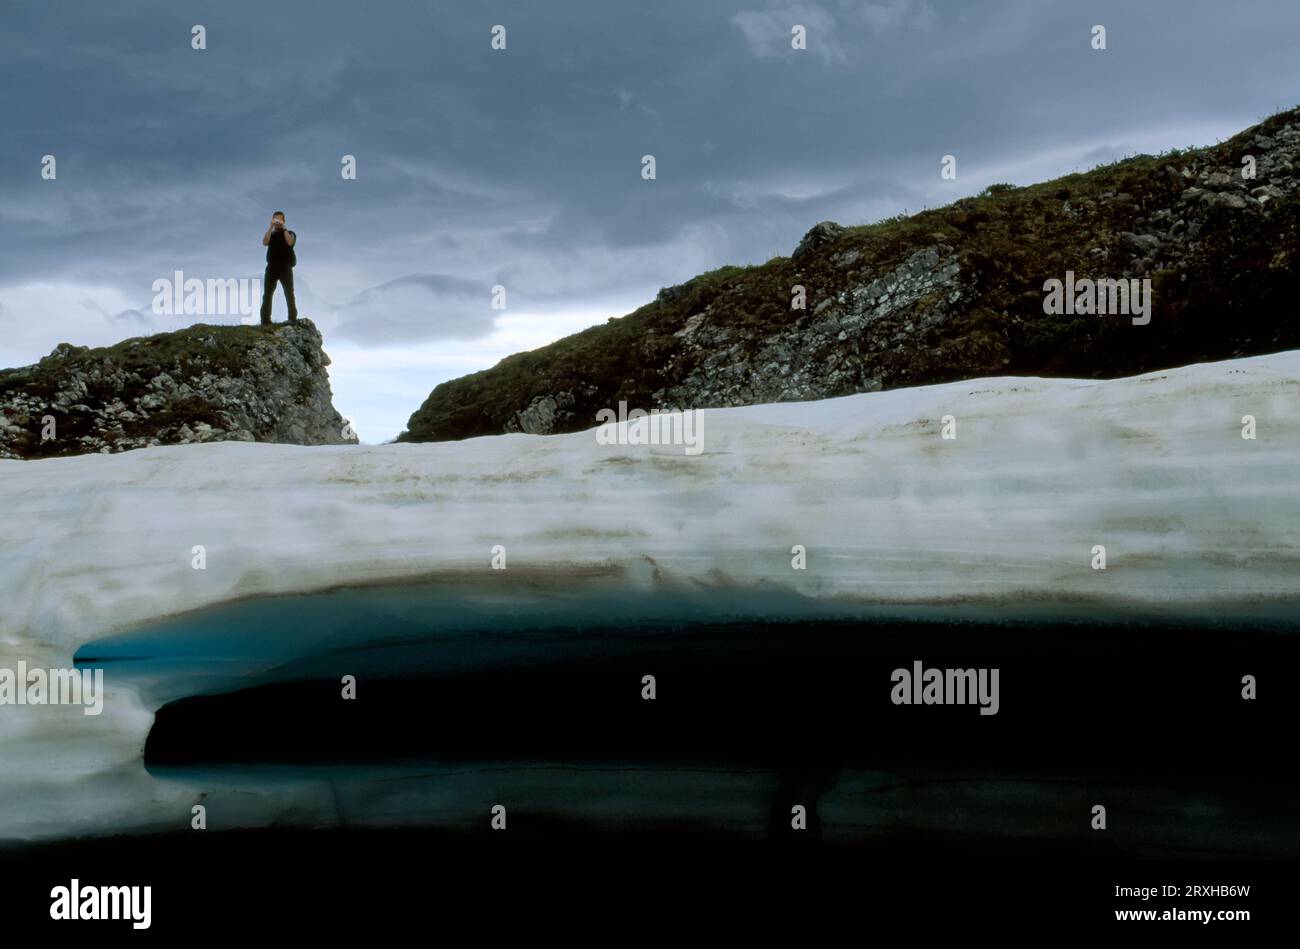 Man looks at and photographs melting ice; North Slope, Alaska, United States of America Stock Photo